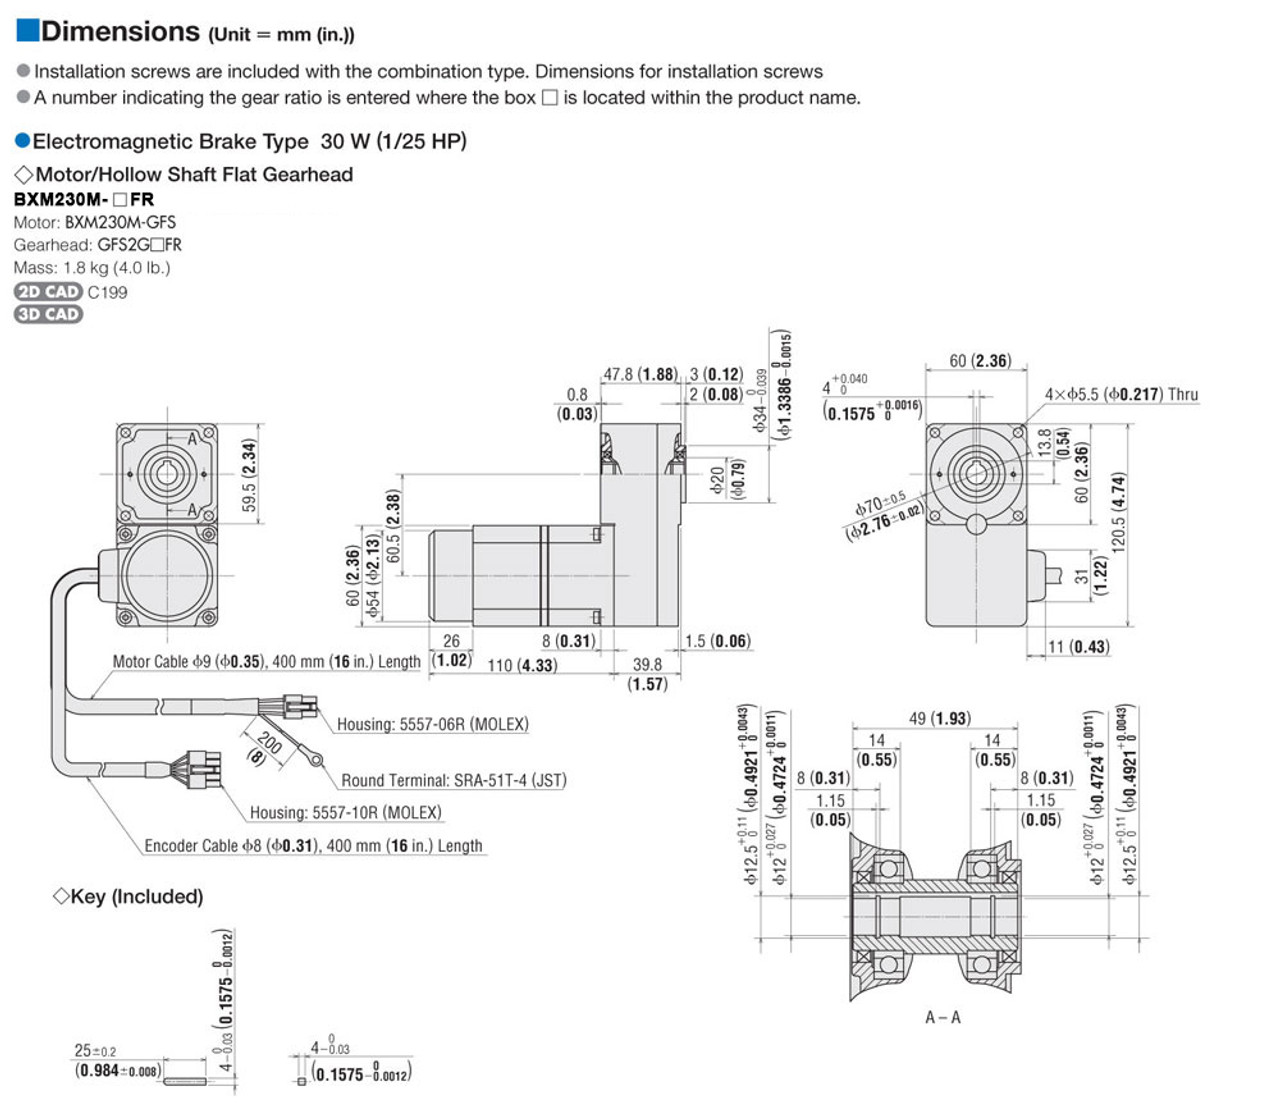 BXM230M-15FR / BXSD30-A2 - Dimensions